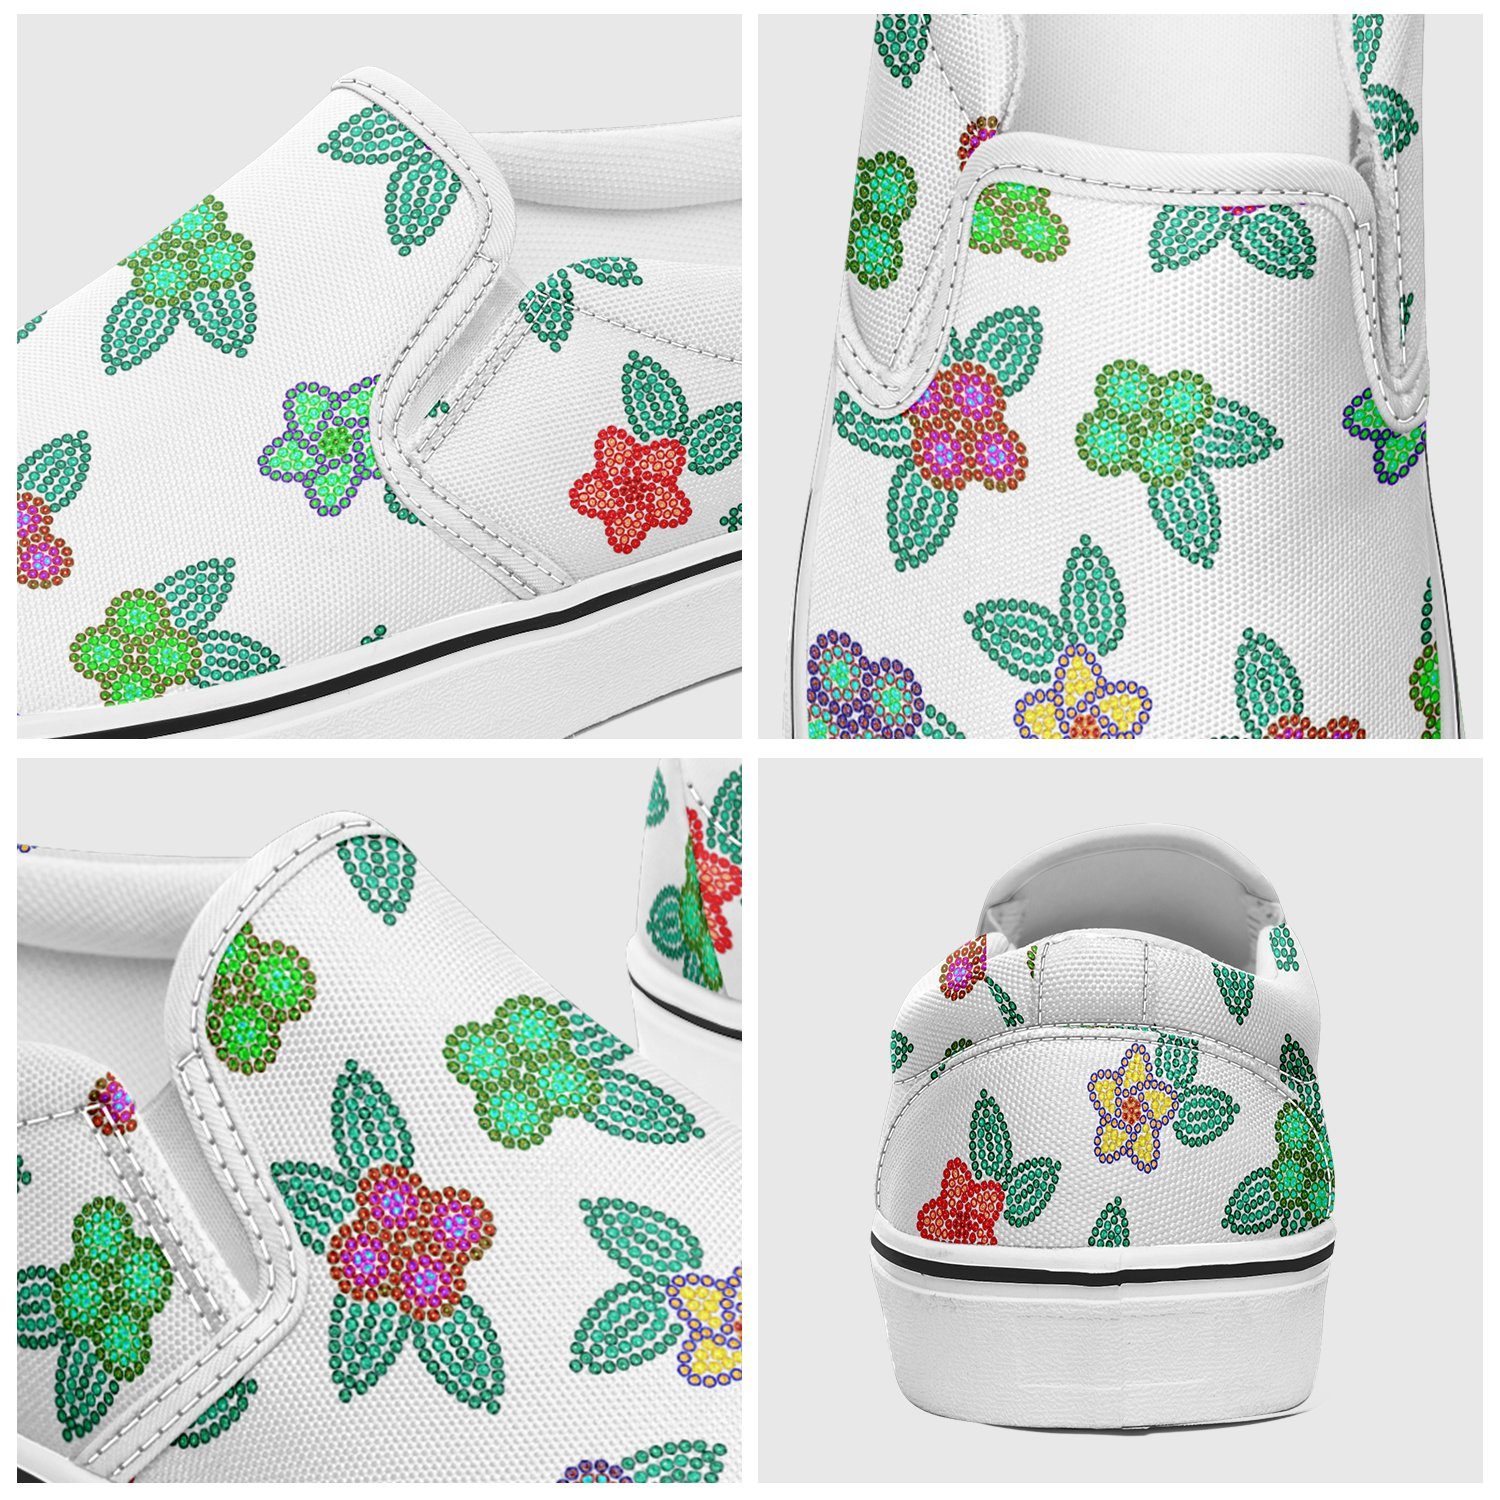 Berry Flowers White Otoyimm Kid's Canvas Slip On Shoes otoyimm Herman 